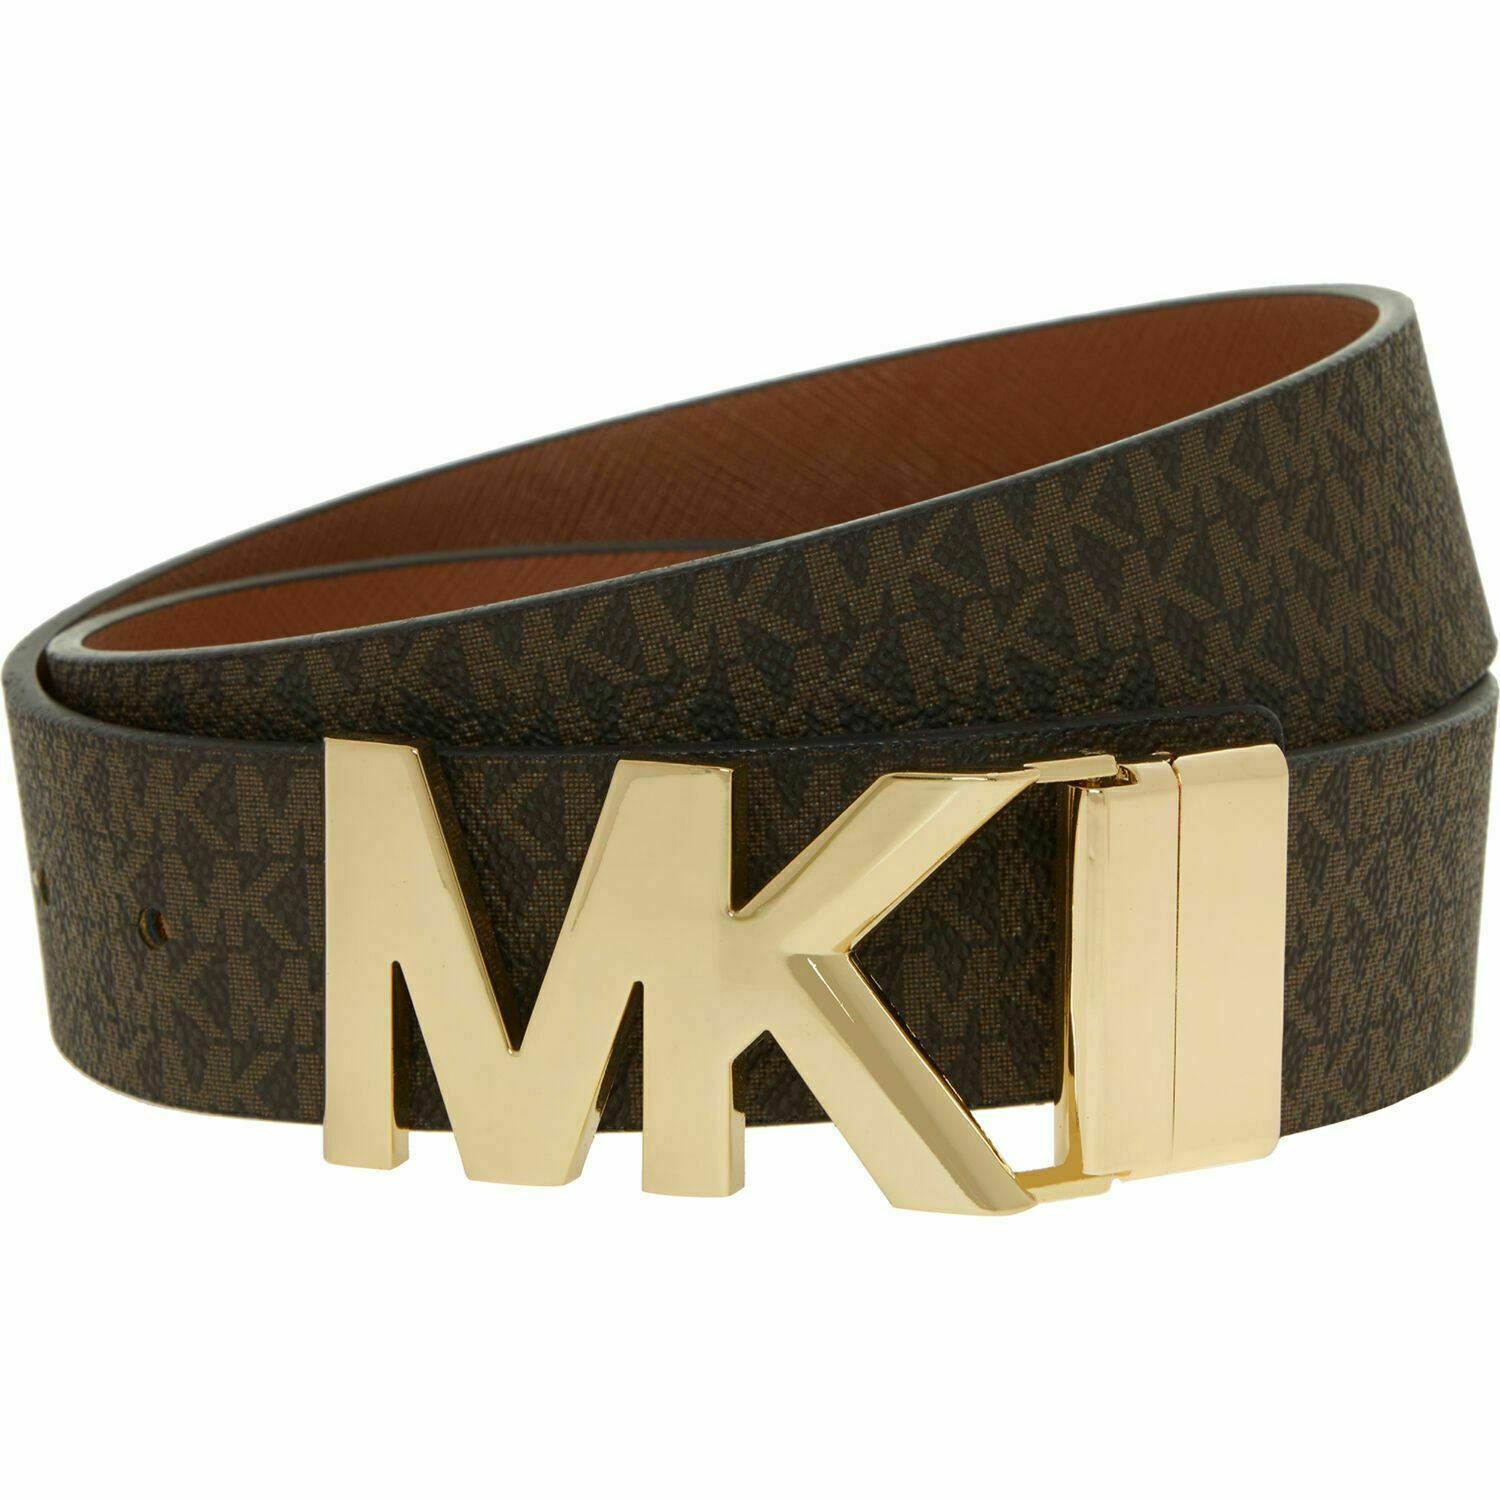 MICHAEL KORS Women's REVERSIBLE Monogram Belt, Chocolate/Tan, size MEDIUM